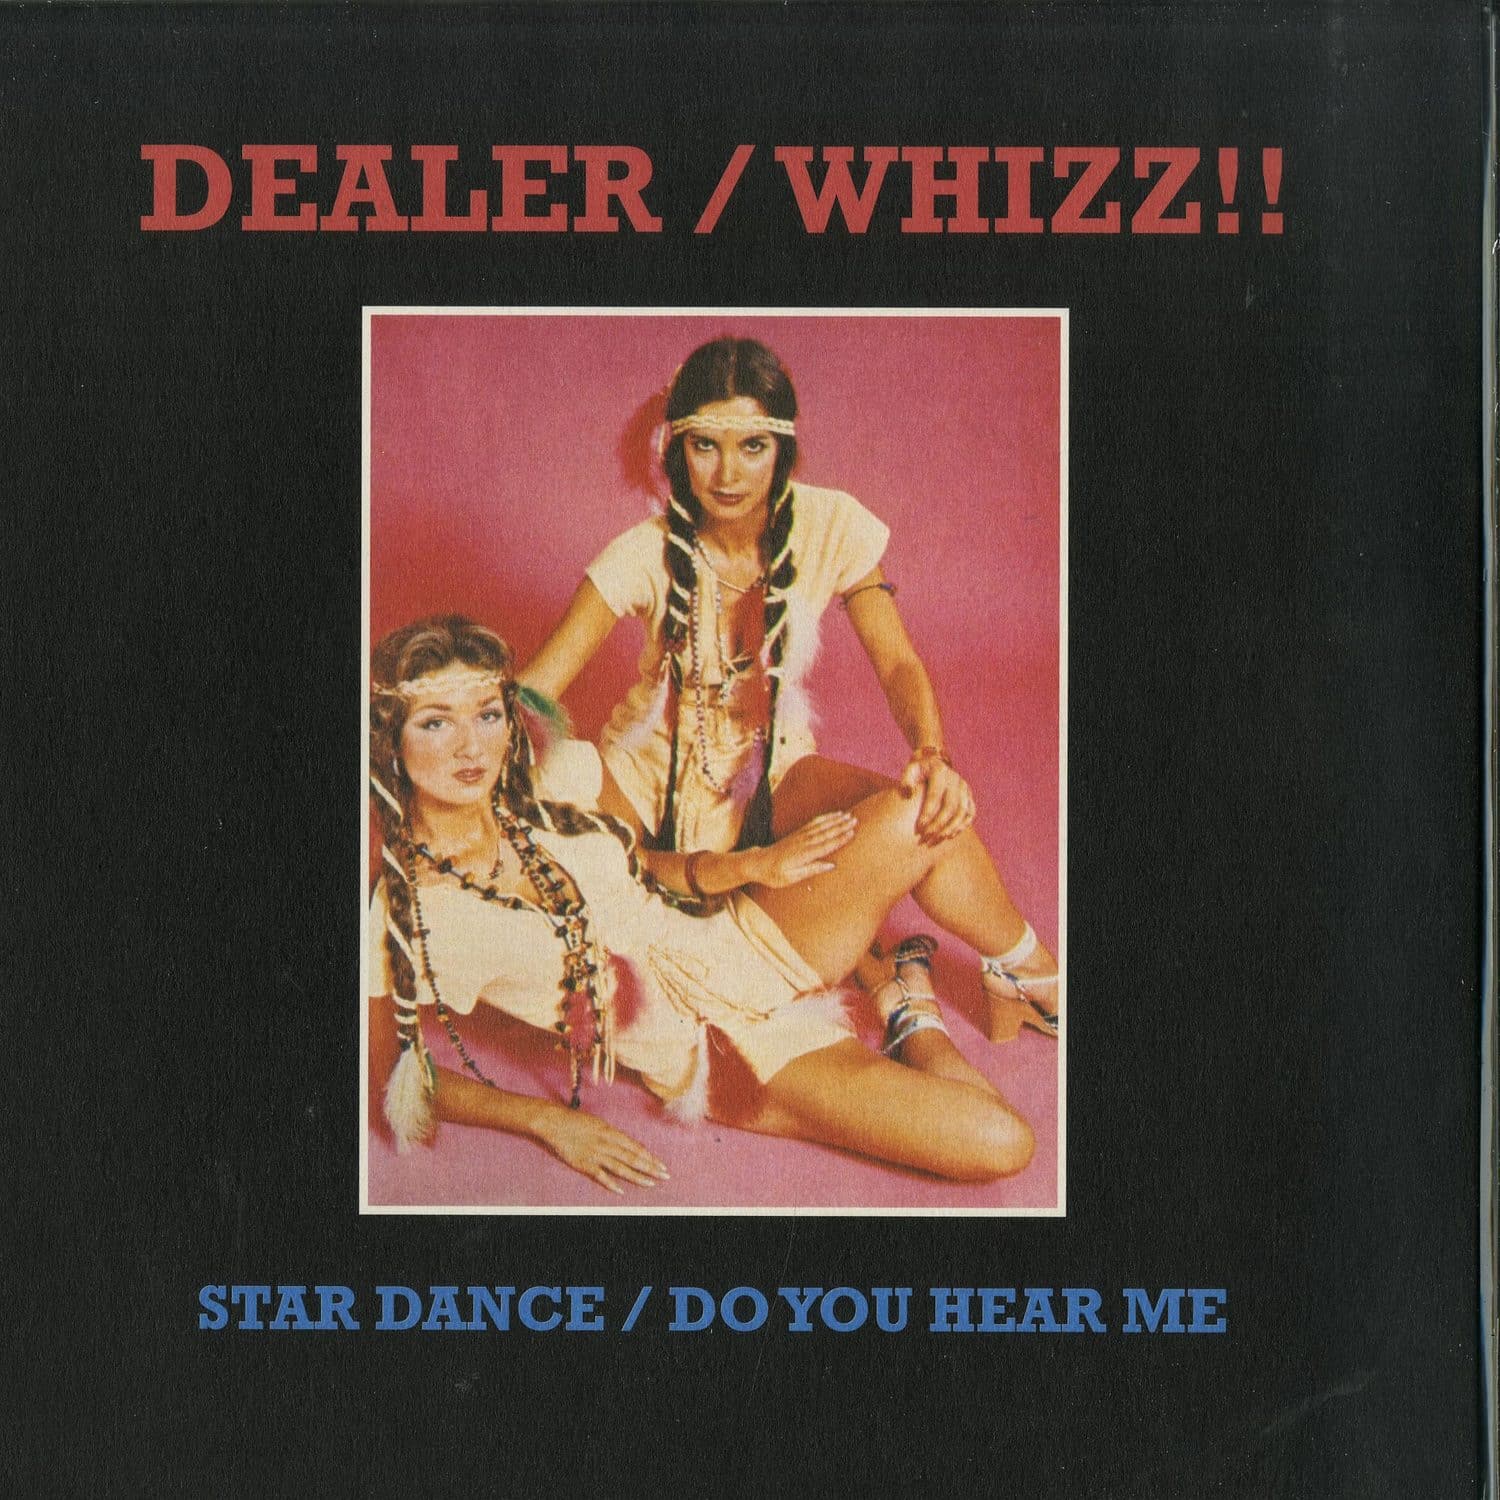 Dealer / Whizz!! - STAR DANCE / DO YOU HEAR ME